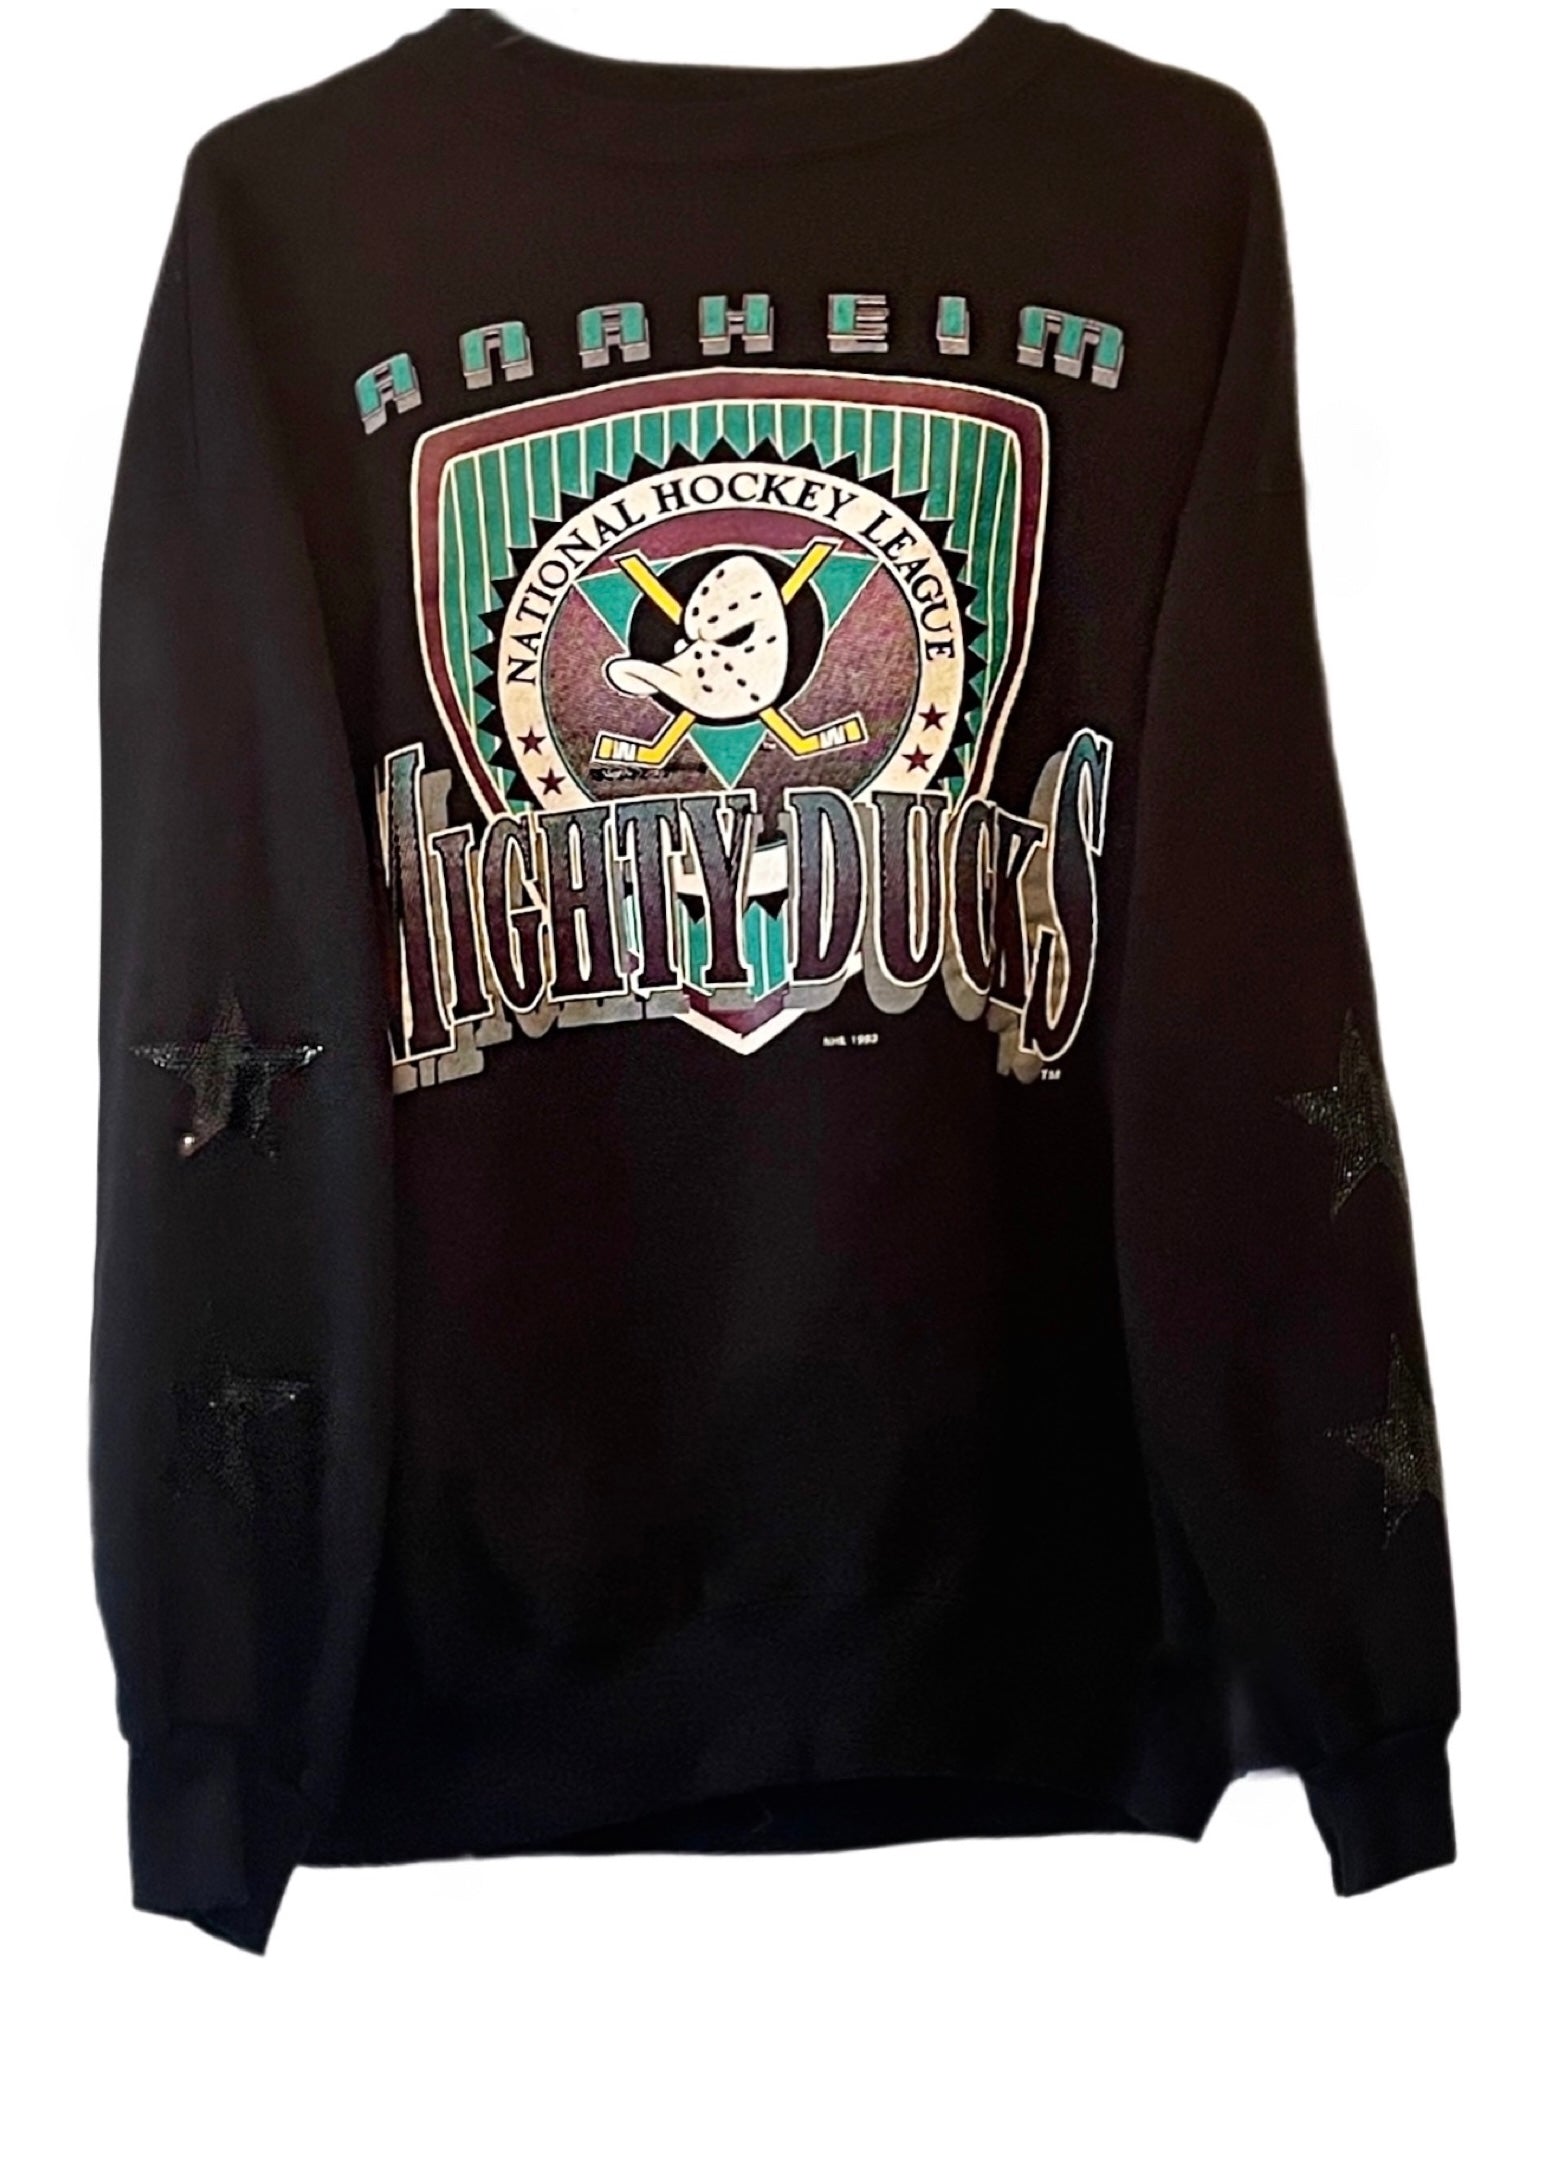 Vintage Anaheim Mighty Ducks Sweatshirt With Black Crystal Star - Trends  Bedding